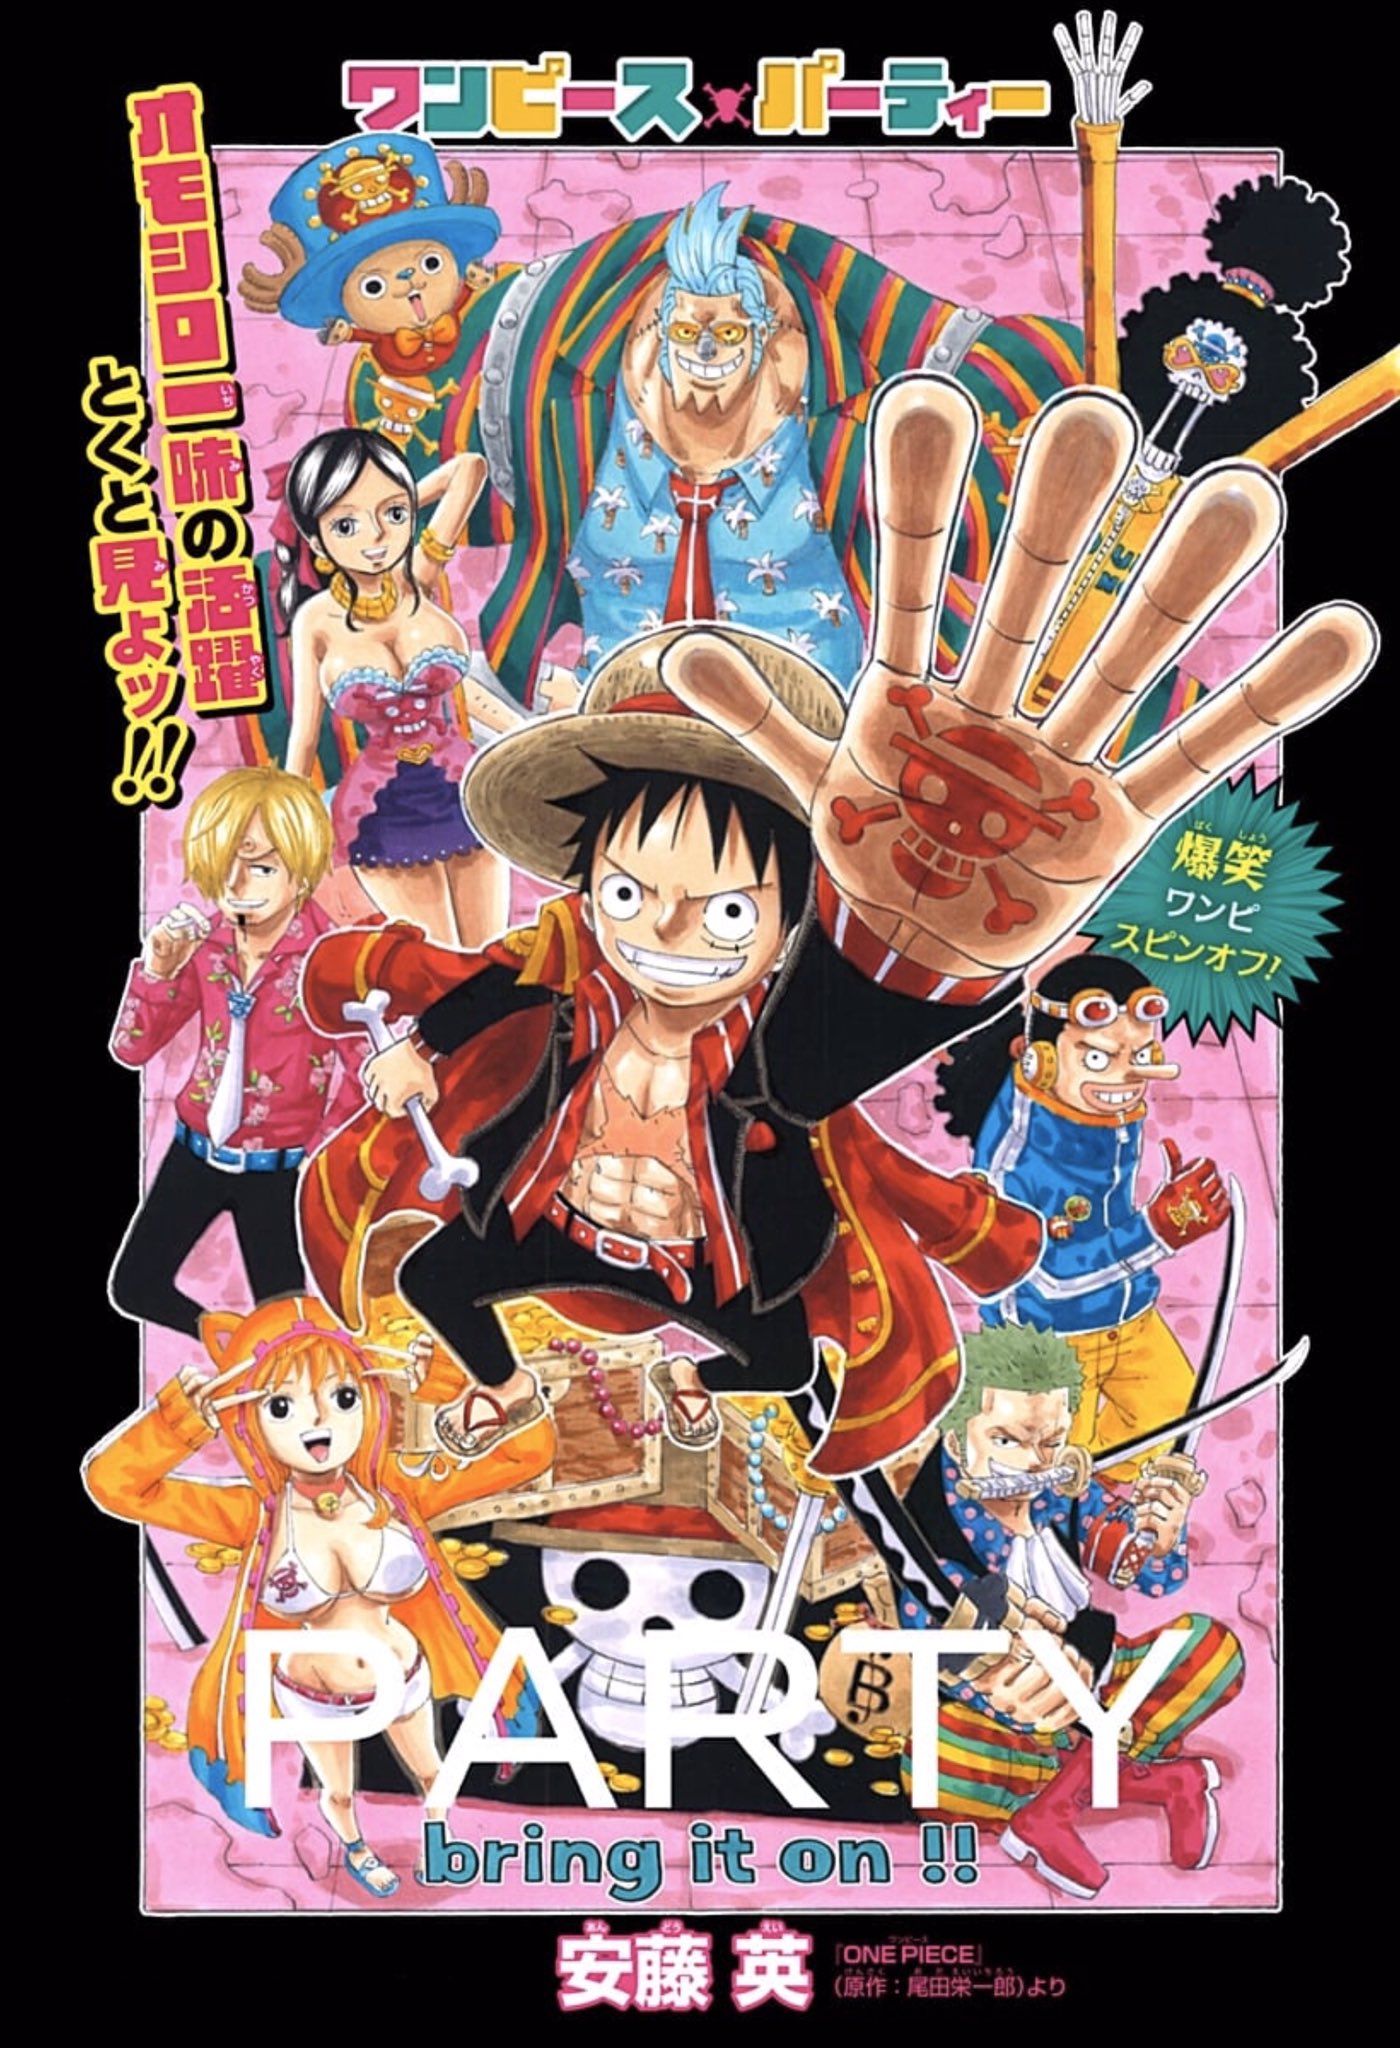 One Piece スタッフ 公式 Official ジャンプ では One Piece 1巻 61巻を無料公開しているほか スピンオフ漫画 ワンピースパーティー の最新話が本日公開 最新の6巻は笑盛りだくさんで 4月3日に原作96巻と同時発売するぞー ジャンプ